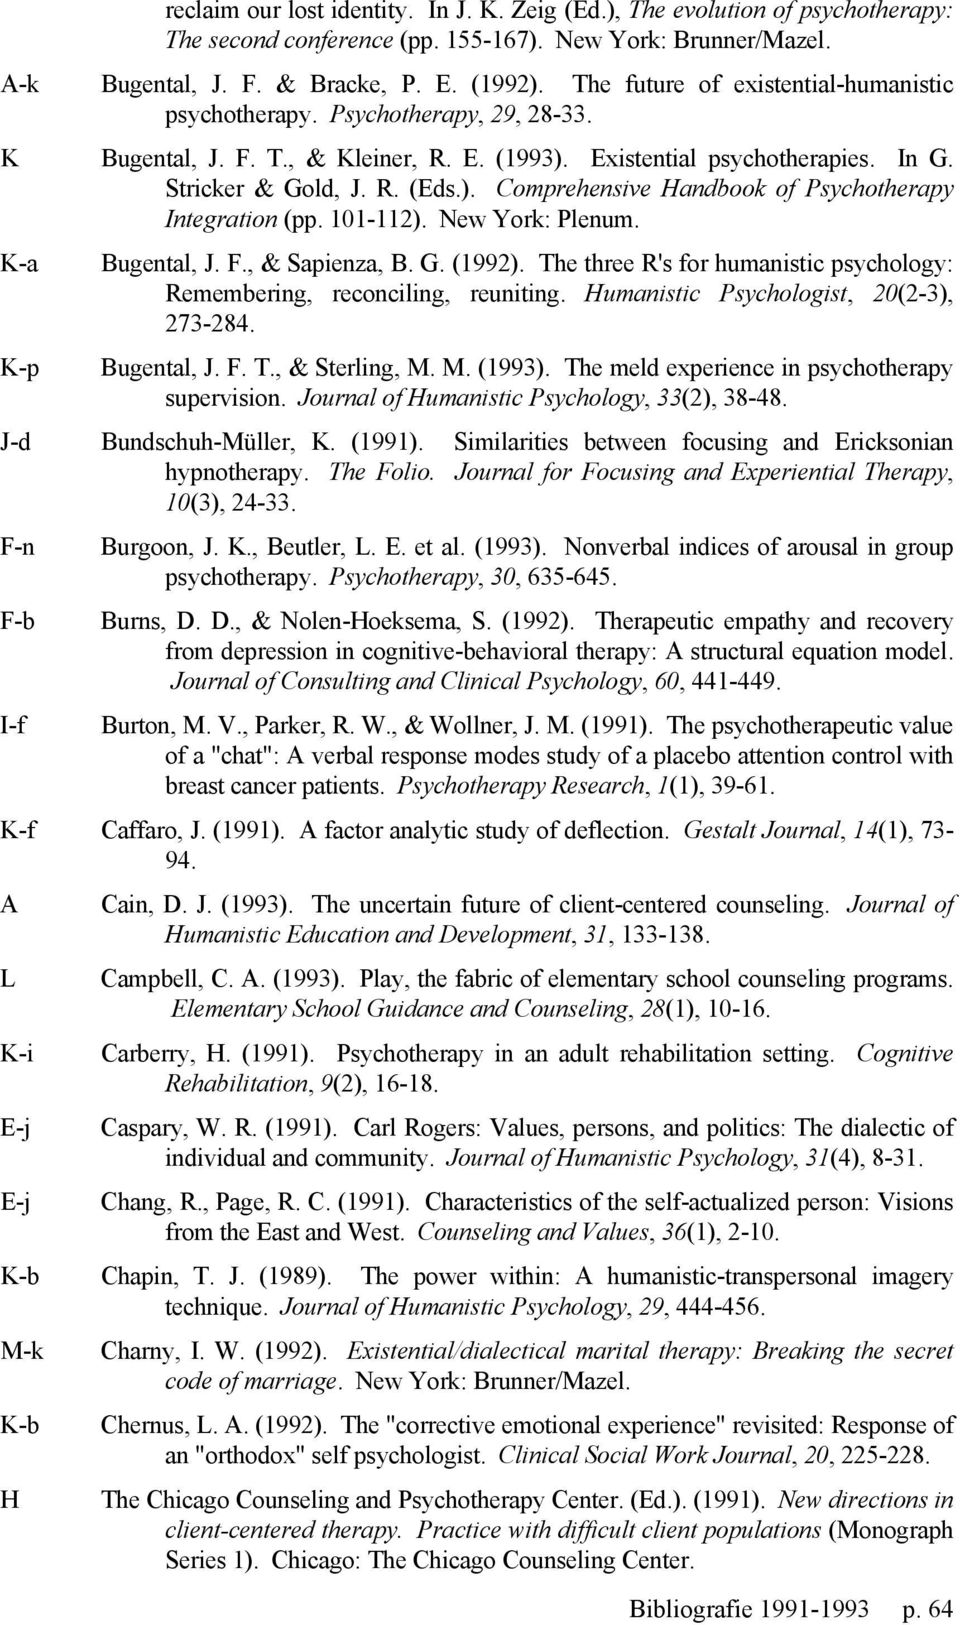 101-112). New York: Plenum. K-a Bugental, J. F., & Sapienza, B. G. (1992). The three R's for humanistic psychology: Remembering, reconciling, reuniting. Humanistic Psychologist, 20(2-3), 273-284.